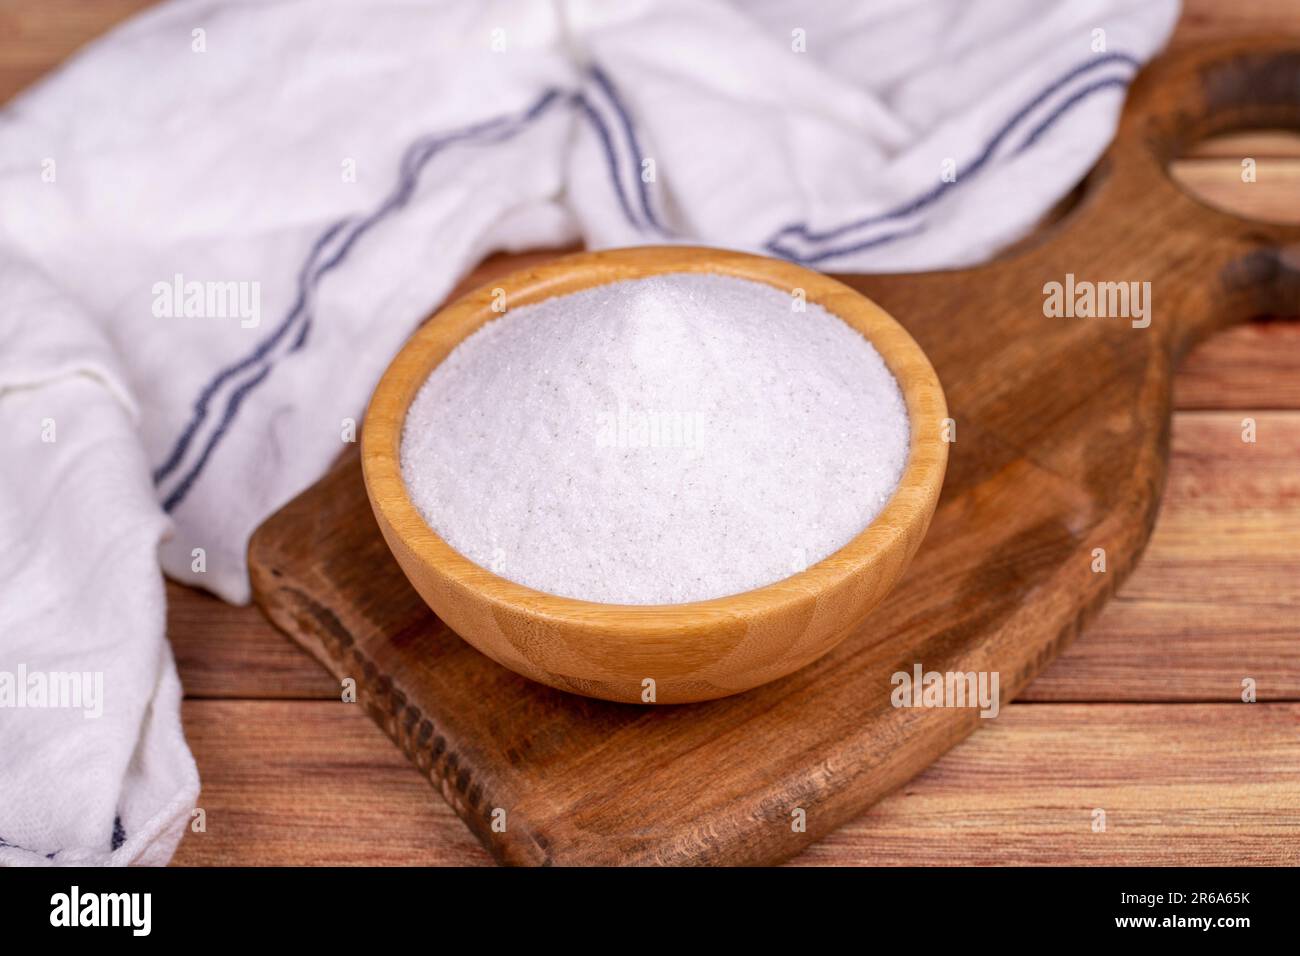 Natural minaret crystal non-iodized grinding salt on wooden background. Ground rock salt in wooden bowl Stock Photo